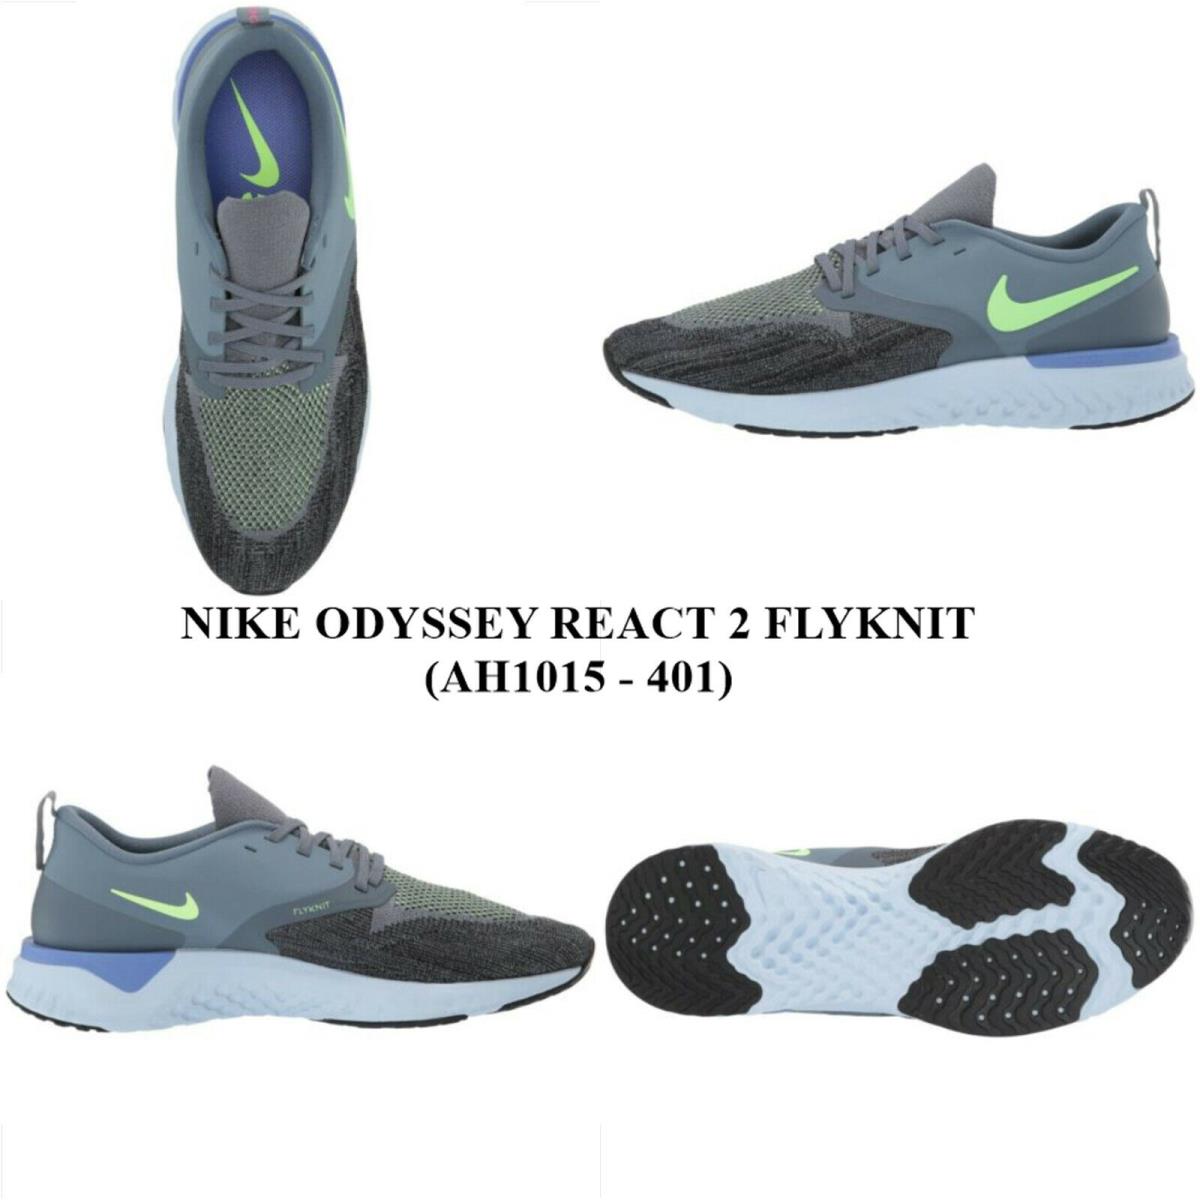 Nike Odyssey React 2 Flyknit AH1015 - 401 Men`s Running Shoes.nwb NO Lid